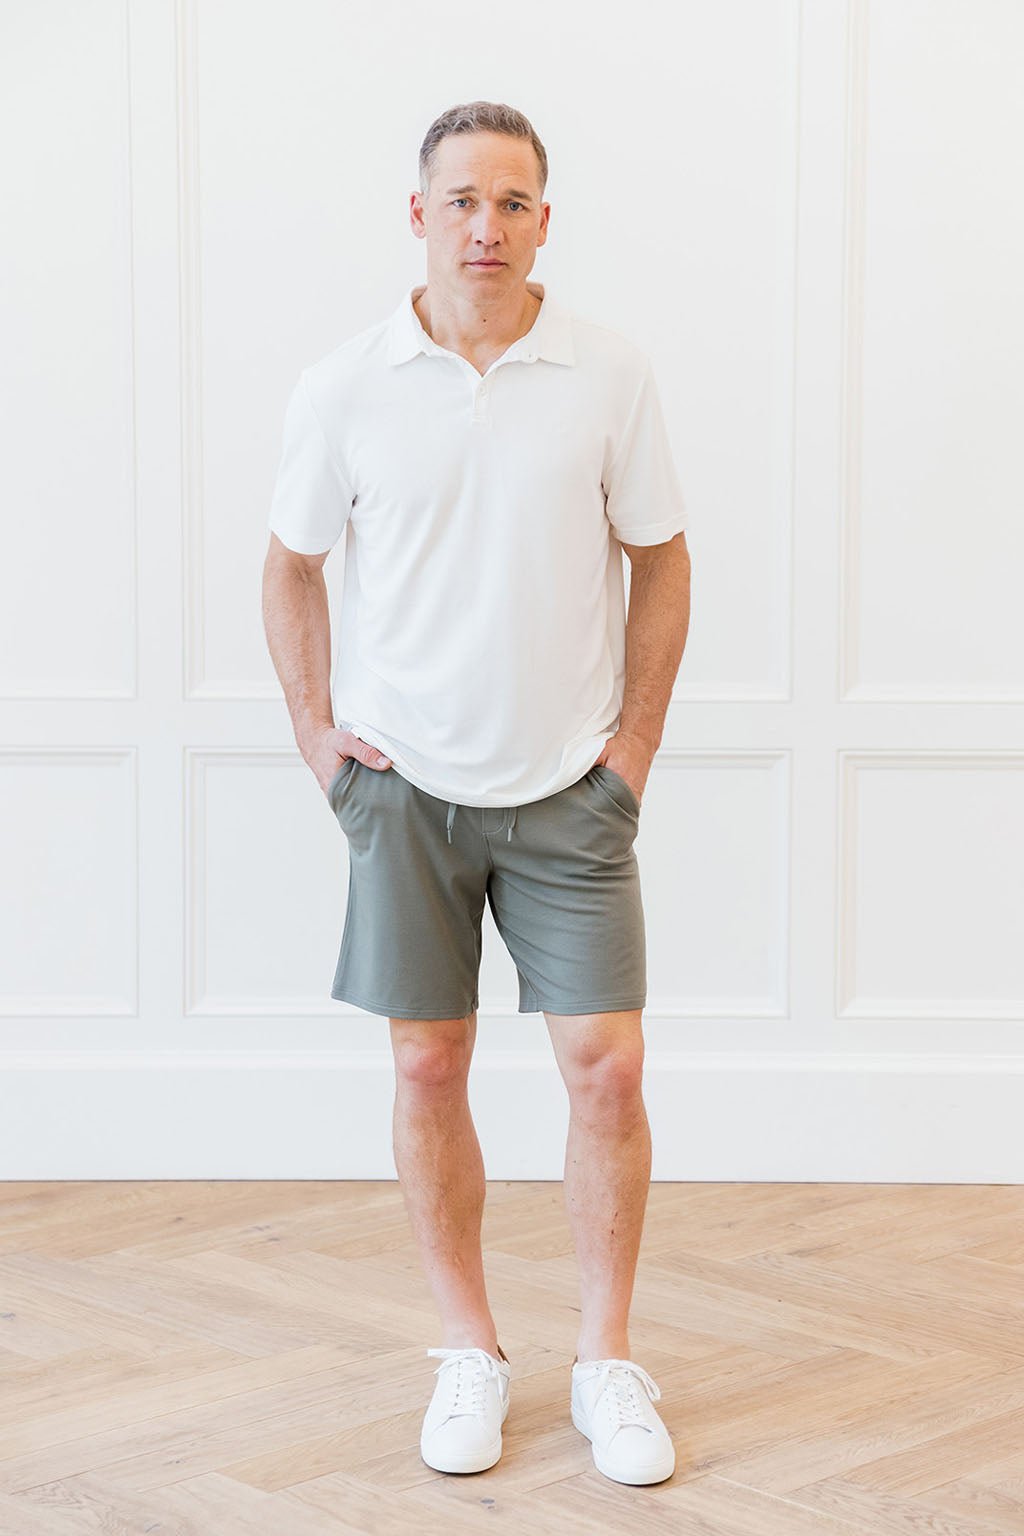 Men's Ultra-Soft Bamboo Shorts - Cozy Earth